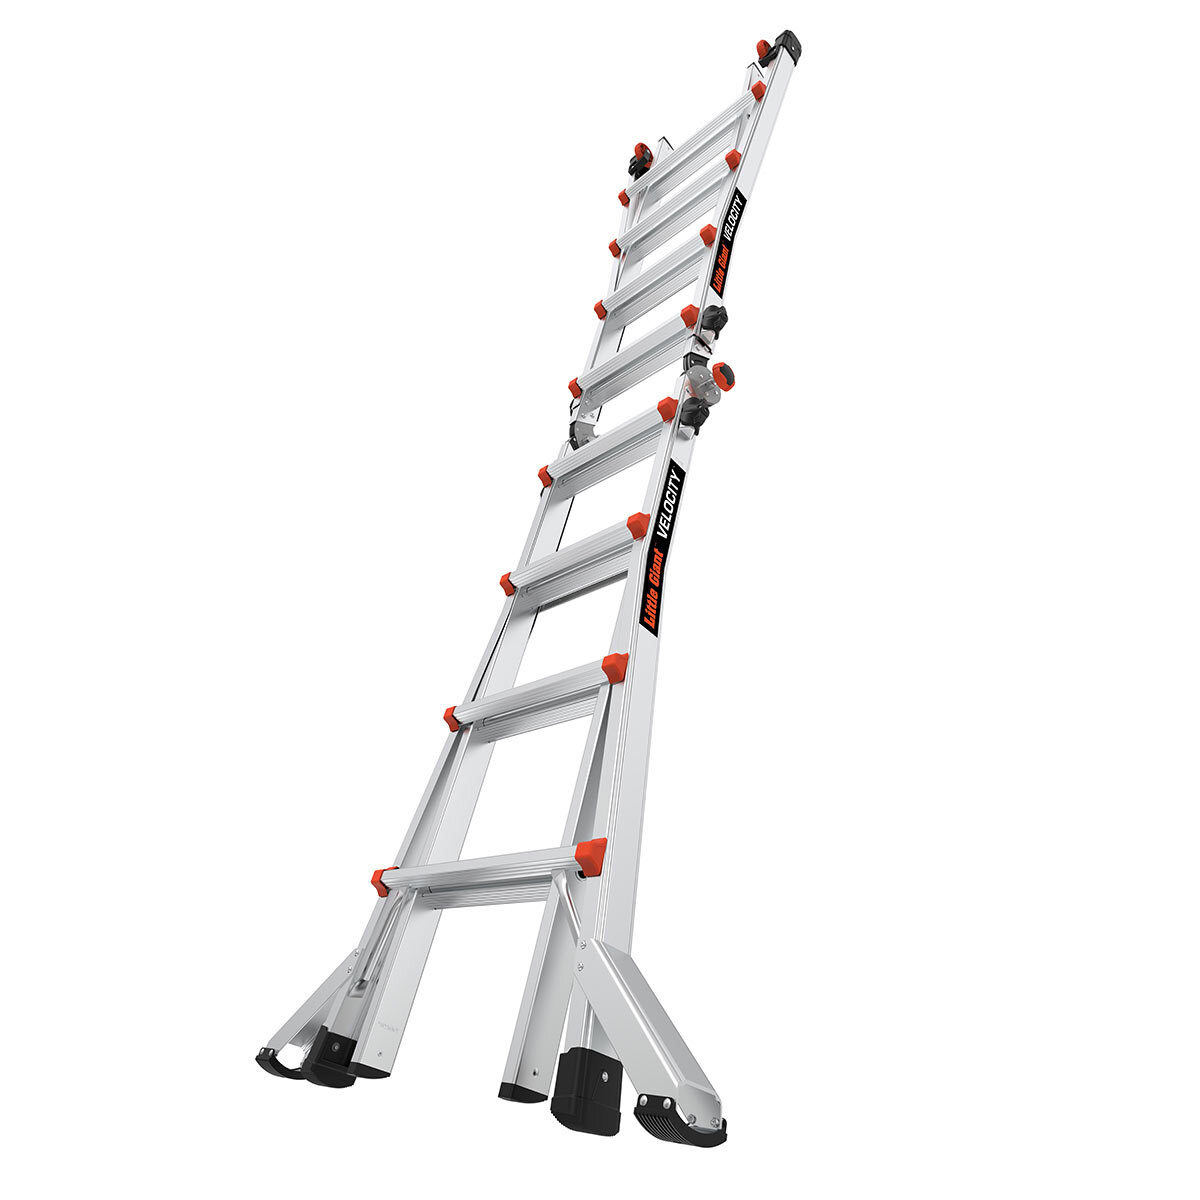 Little Giant 4 Rung Velocity Series 2.0 Multi-Purpose Ladder